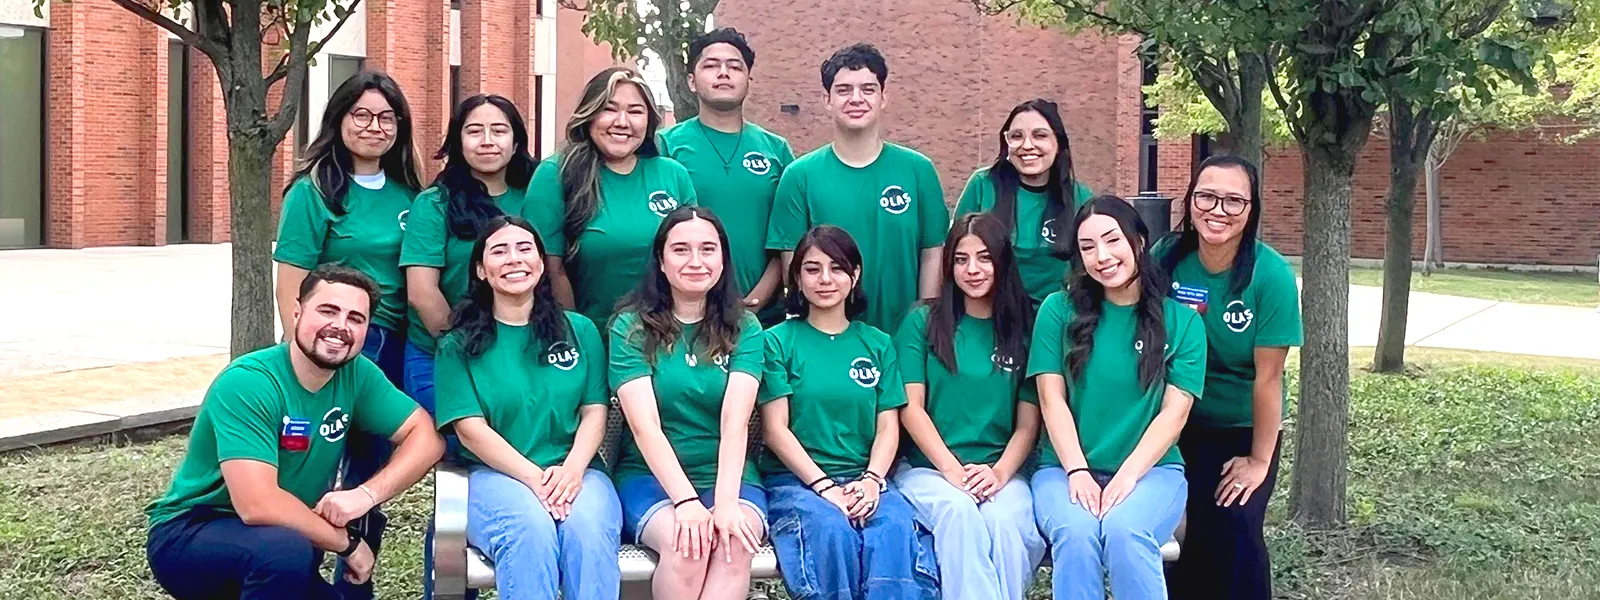 11 OLAS students and 2 advisors wearing matching green OLAS t-shirts.